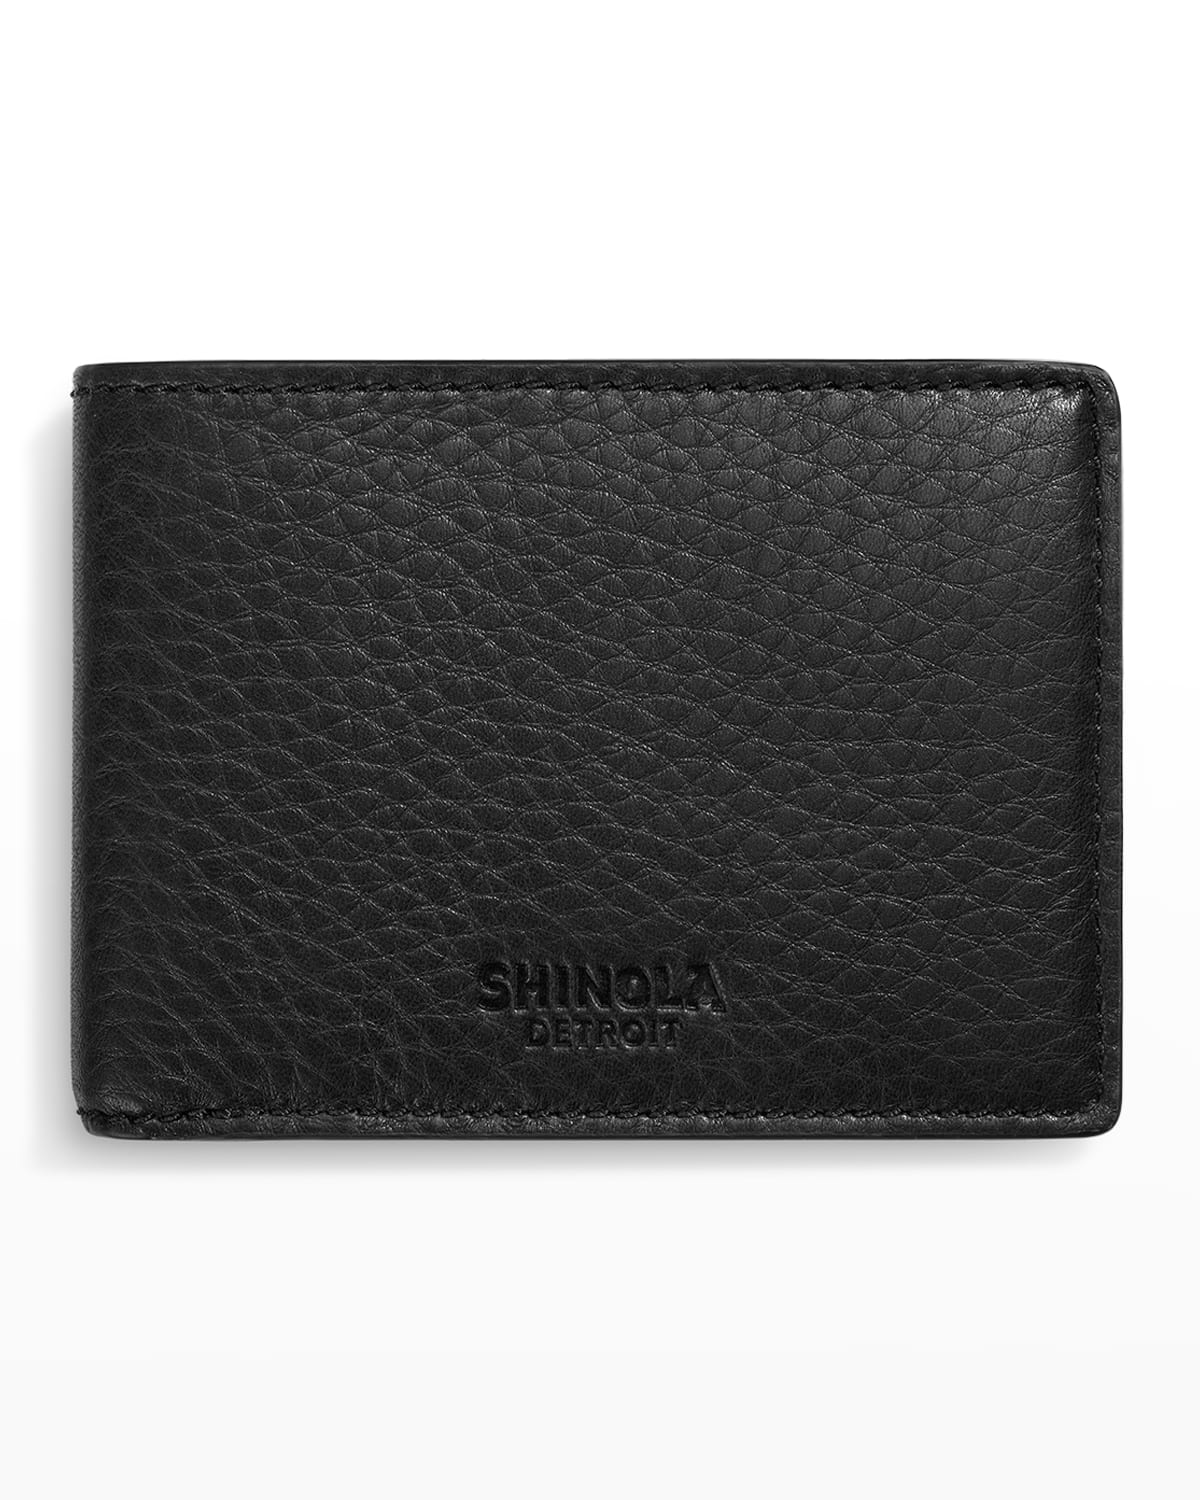 Shinola Men's Slim Leather Bifold Wallet